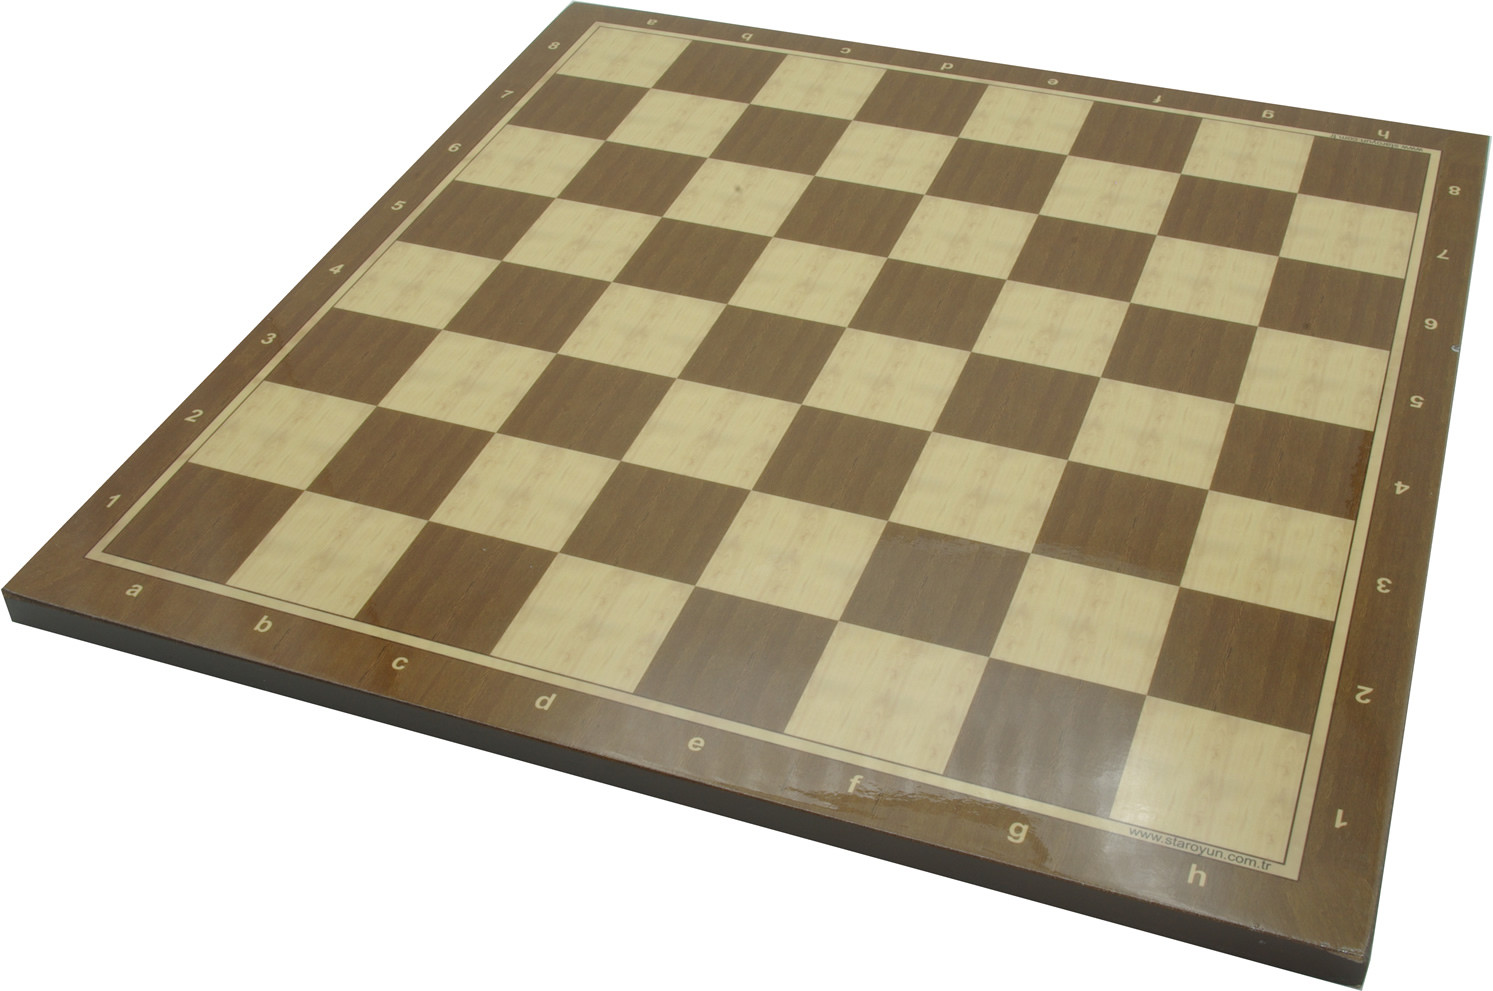 Wood Chess Board No 2 - 37 x 37cm, Sycamore & Walnut